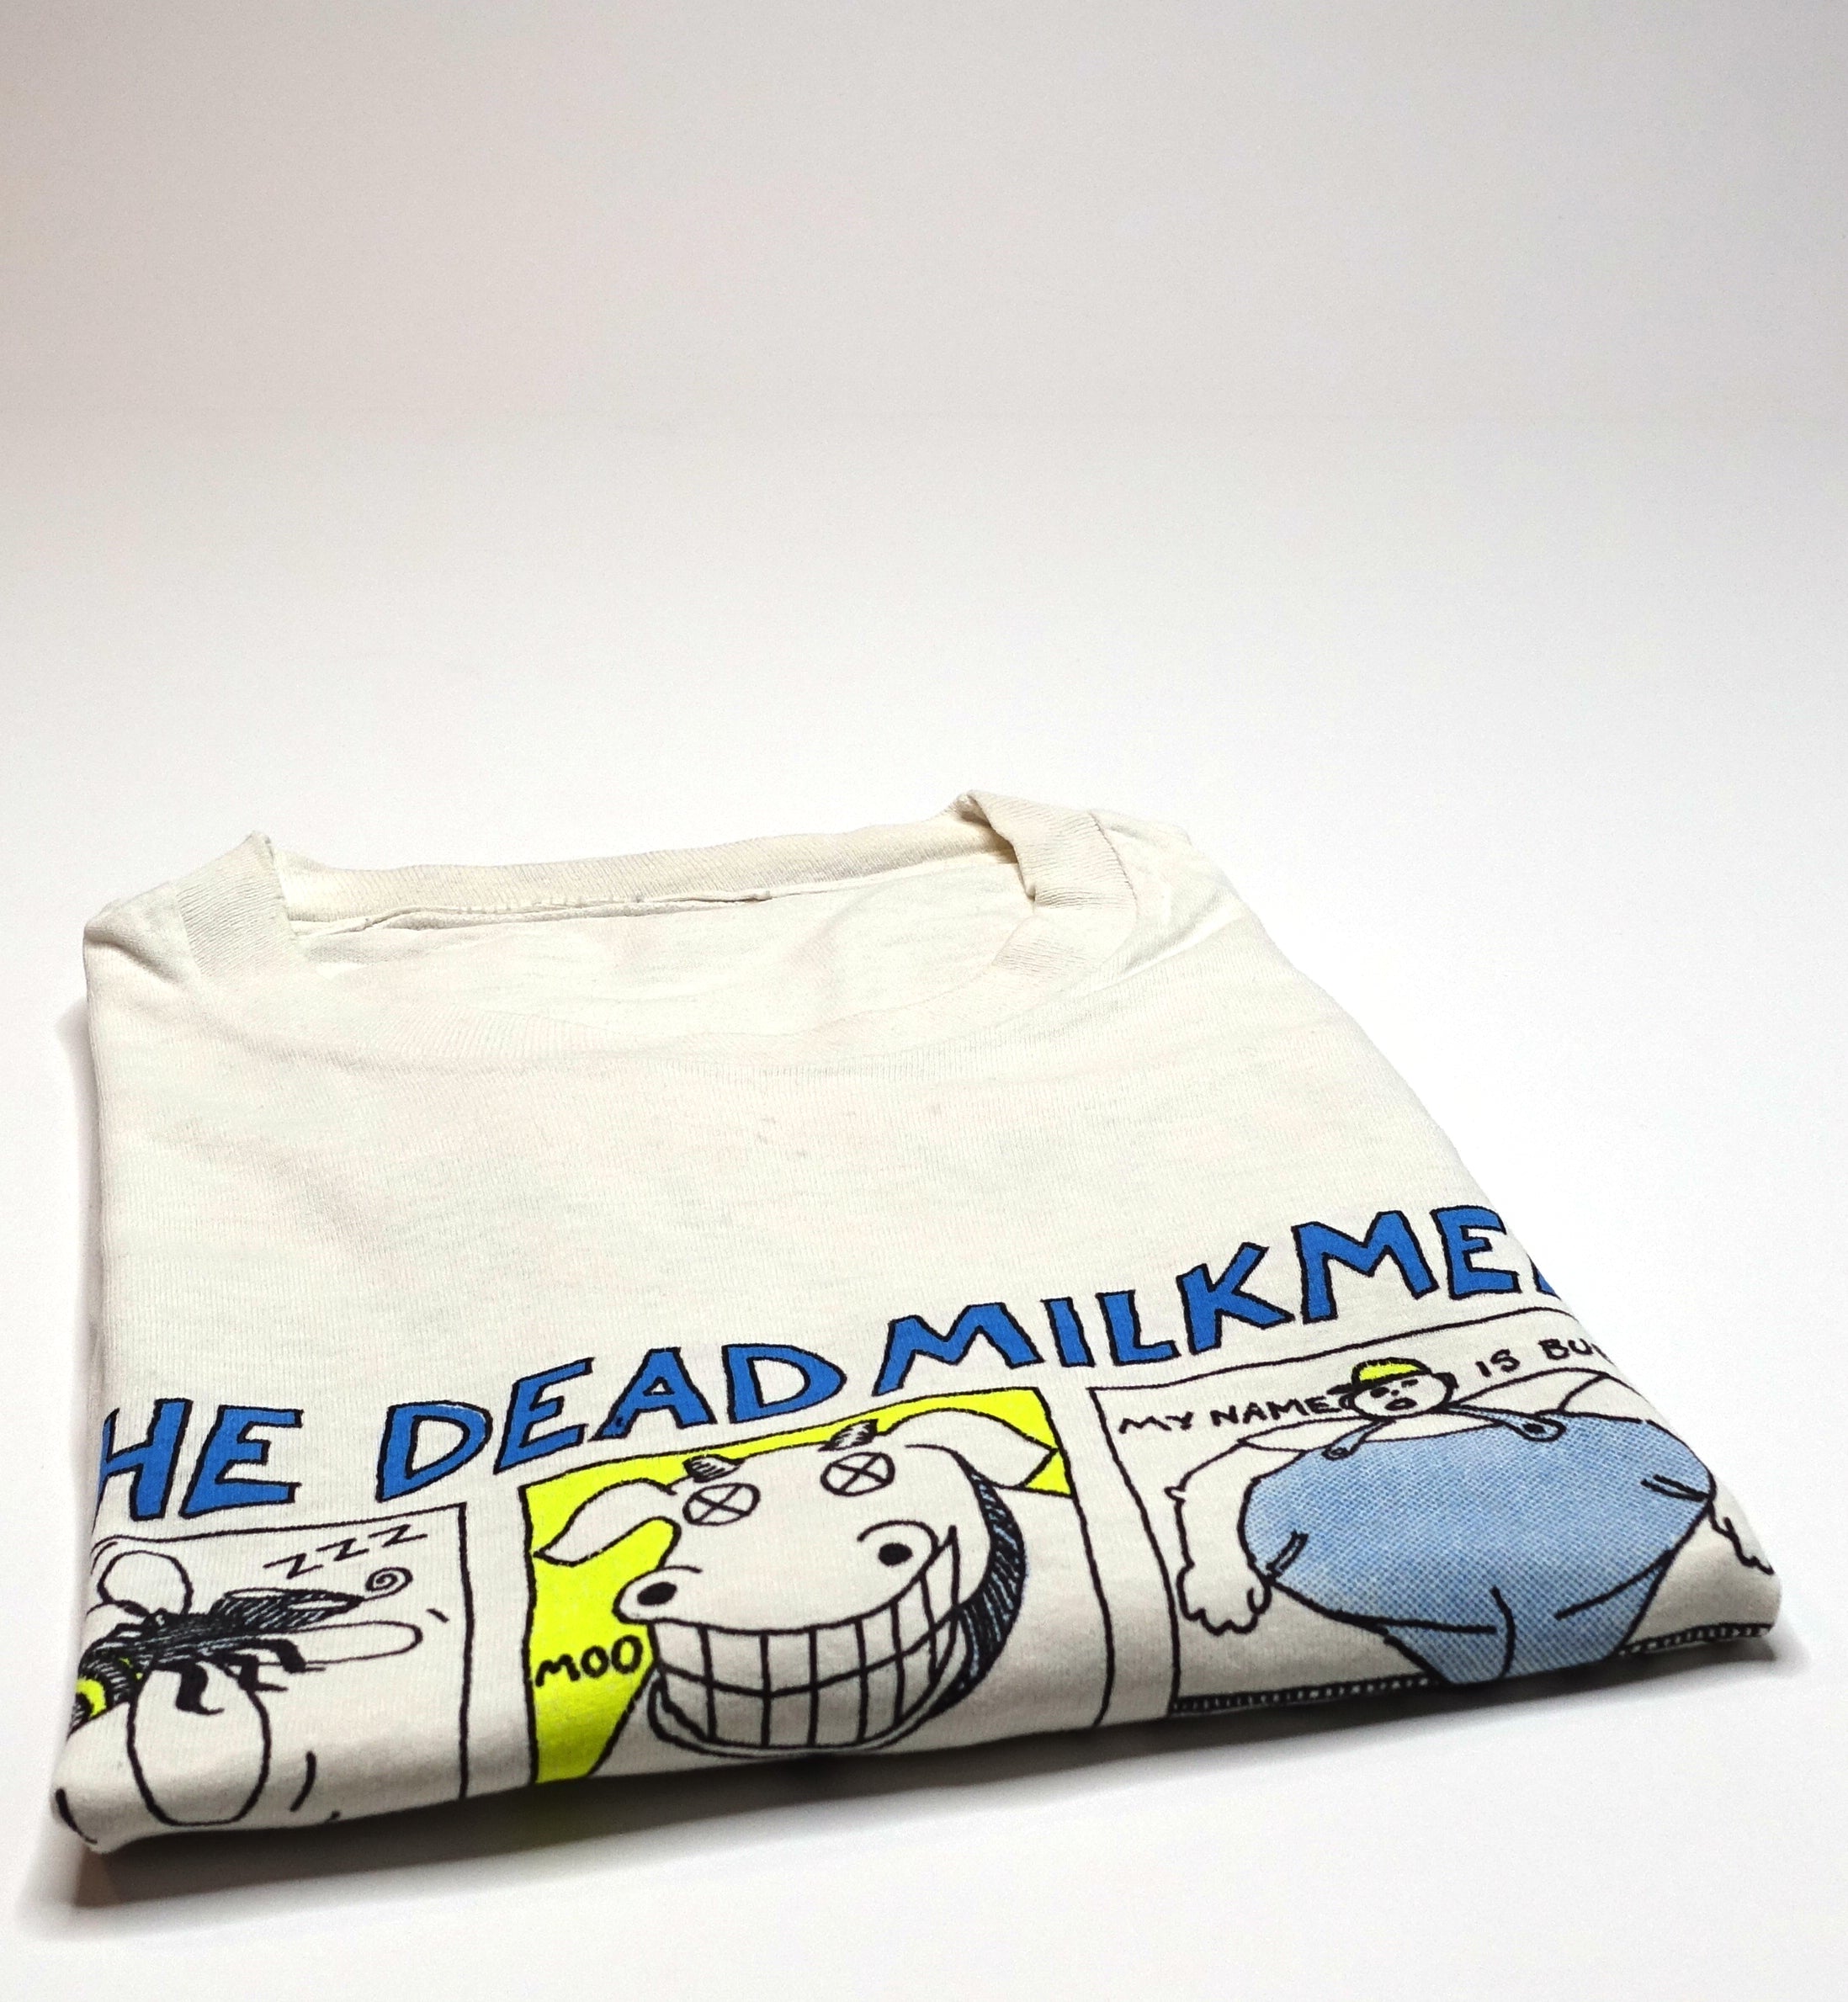 Dead Milkmen - Beelzebubba Mow Across America 1989 Tour Shirt Size XL